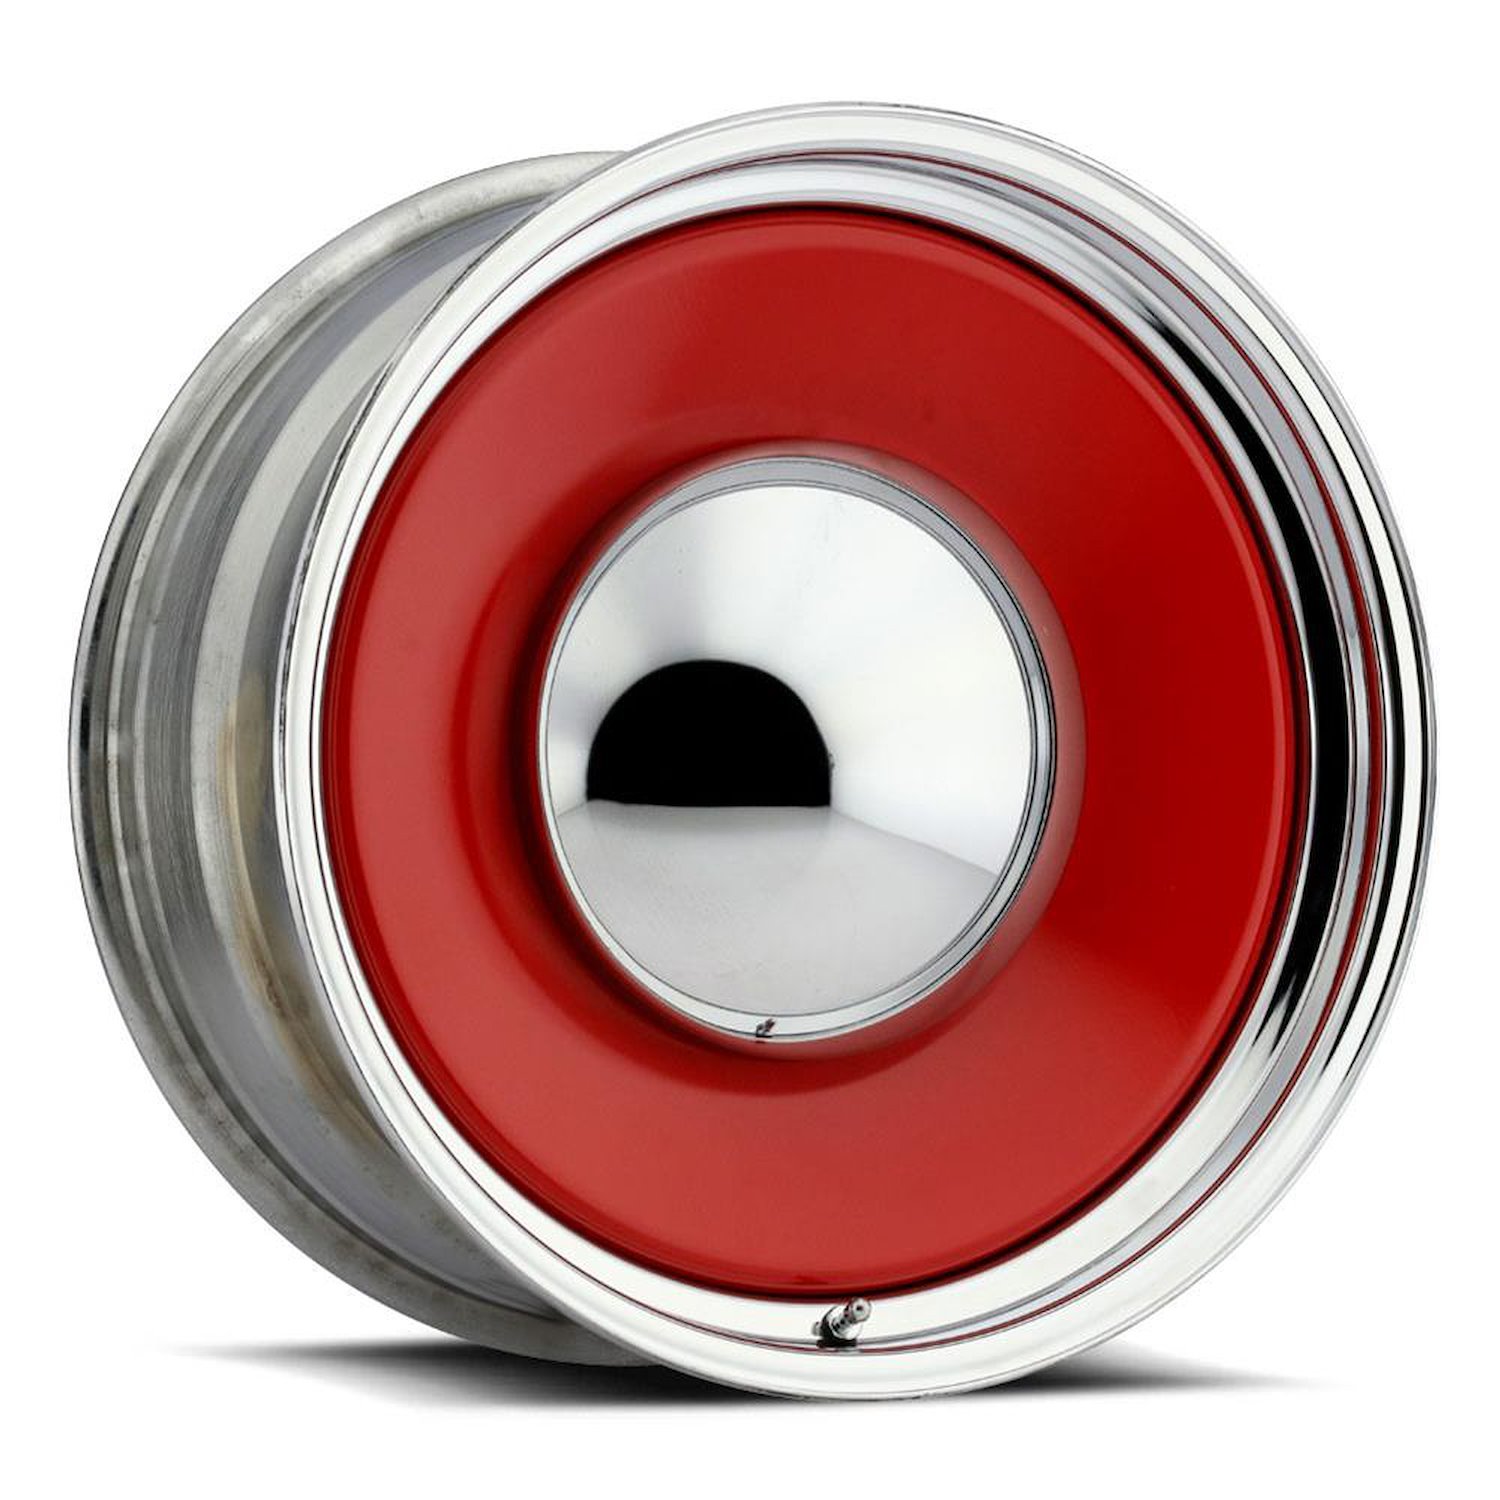 631-2834 631-Series Rat Rod Wheel [Size: 20" x 8"] Gloss Red Finish